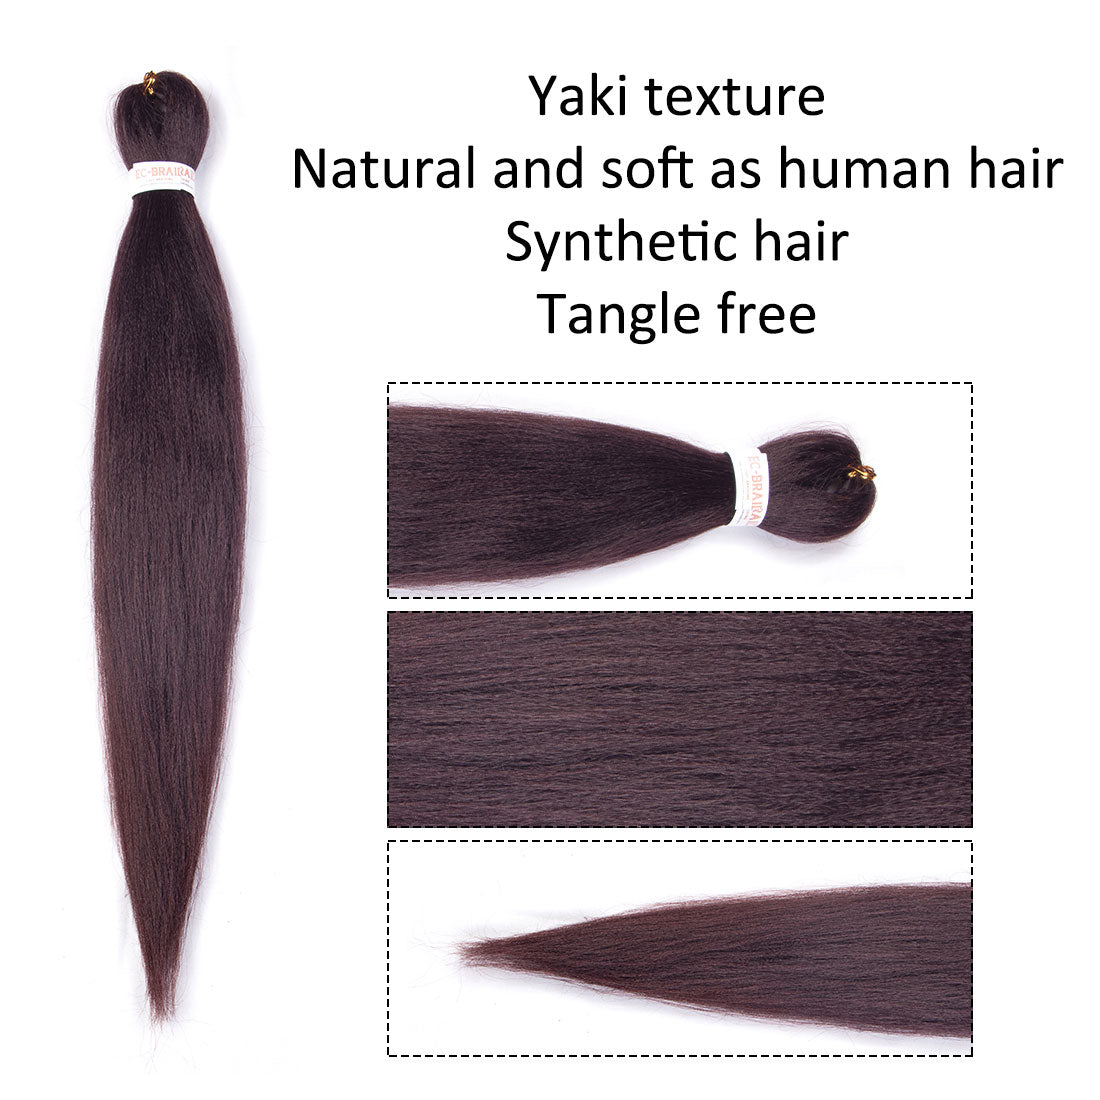 EZ Braid #33 Pre Stretched Braiding Hair 26" Yaki Synthetic Hair